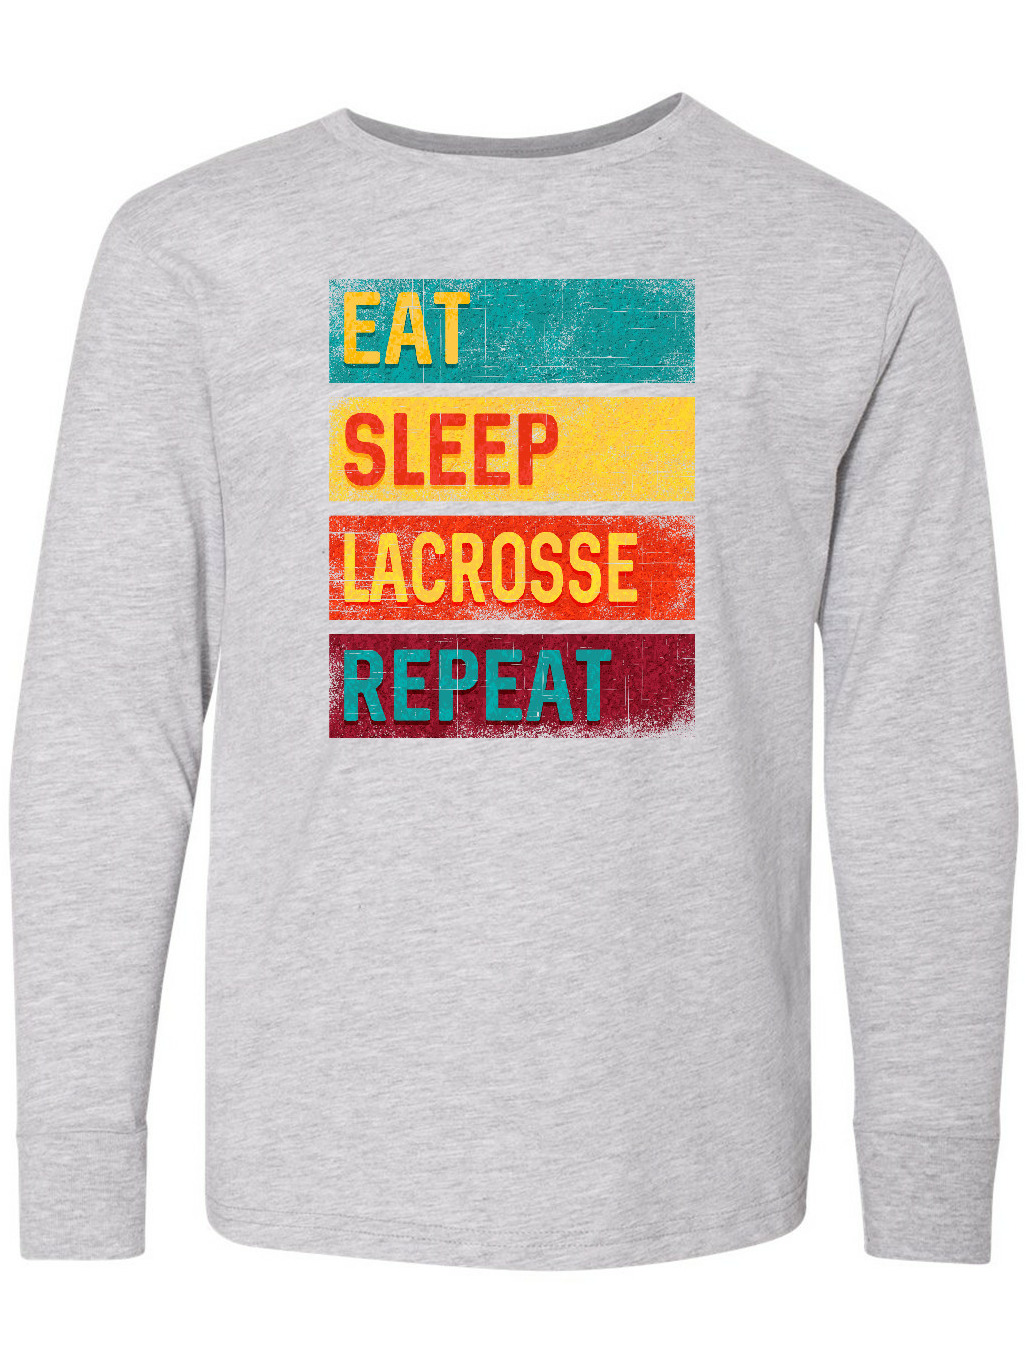 Inktastic Lacrosse Player Eat Sleep Lacrosse Repeat Long Sleeve Youth T-Shirt - image 1 of 4